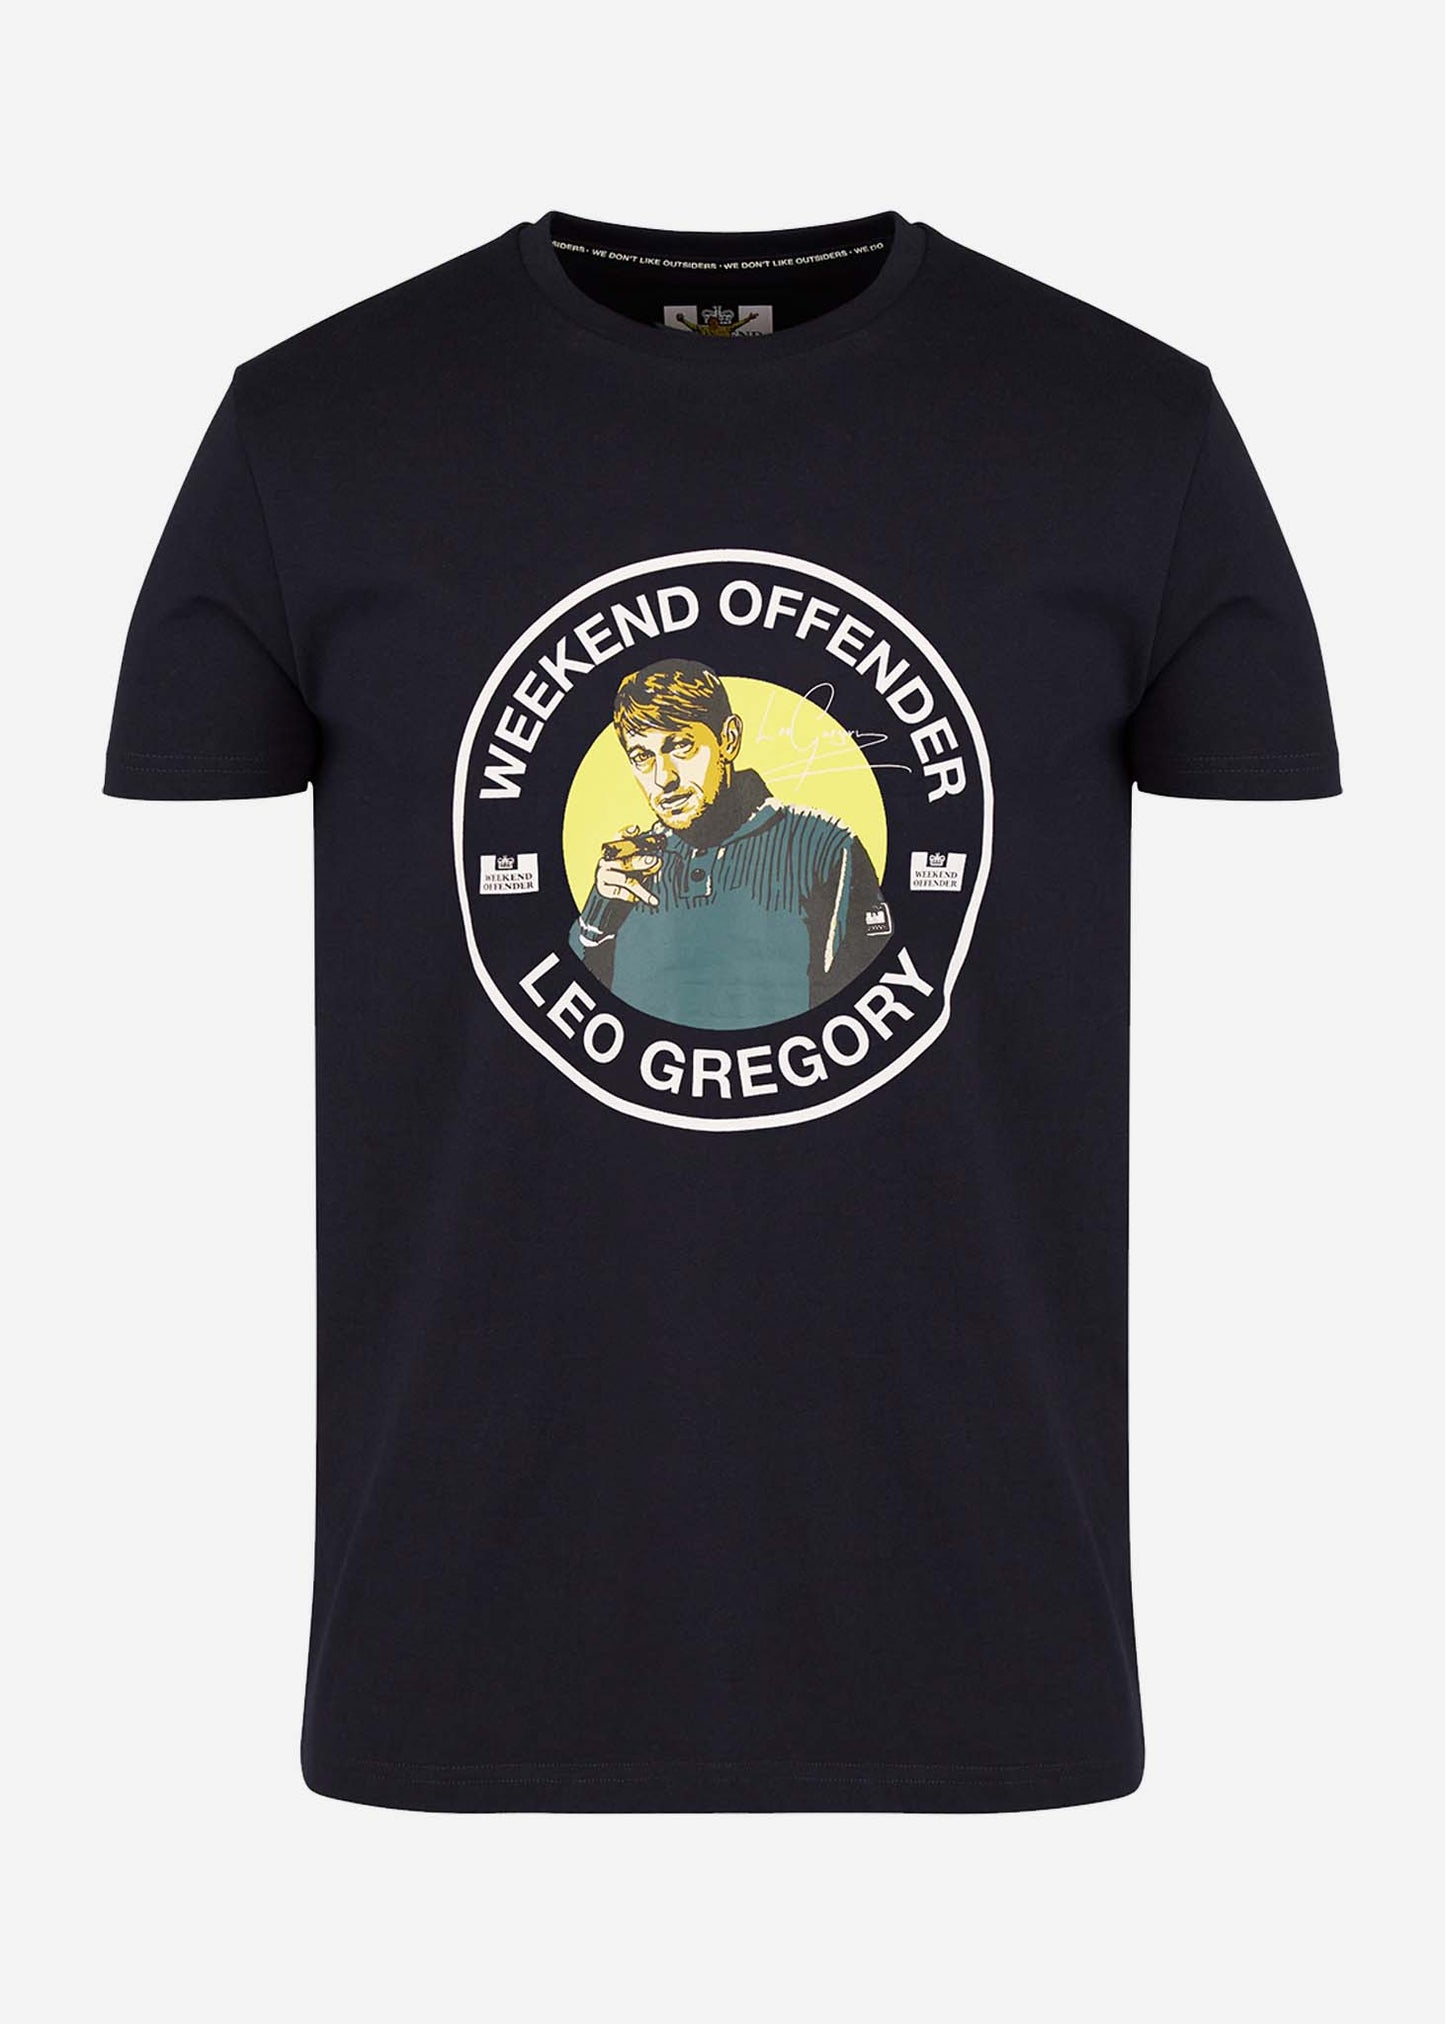 leo gregory t-shirt navy 